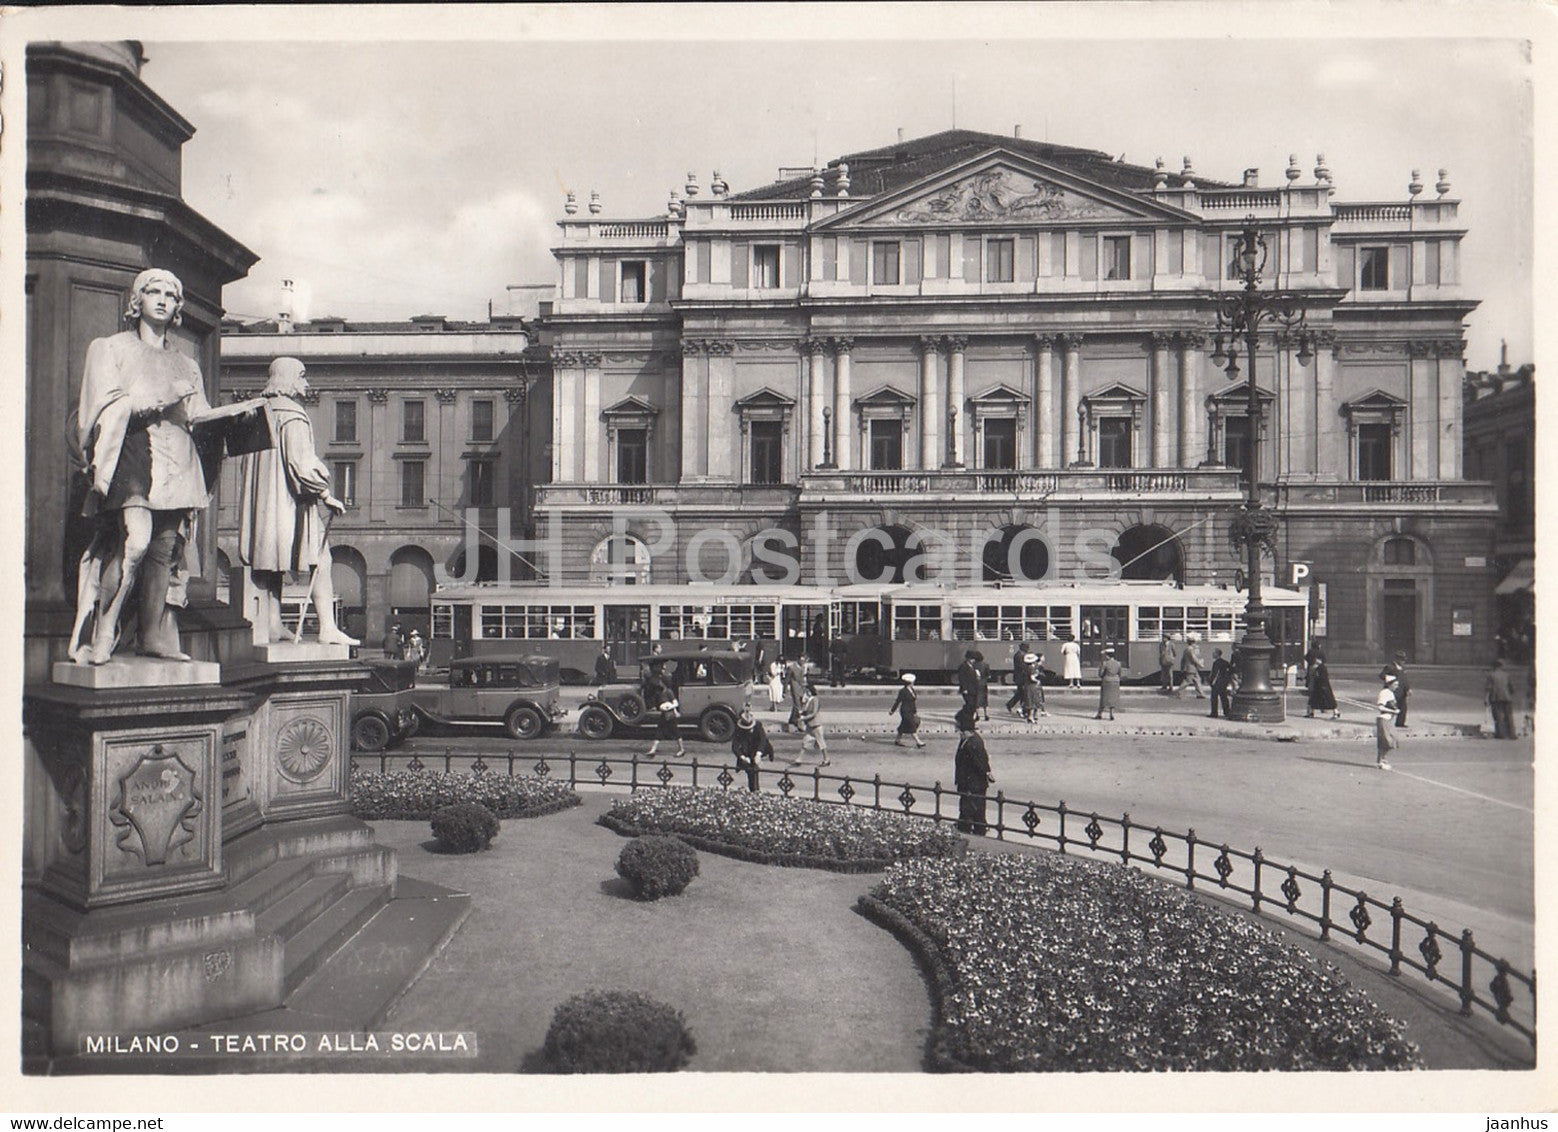 Milano - Milan - Teatro alla Scala - tram - car - theatre - old postcard - 1947 - Italy - used - JH Postcards